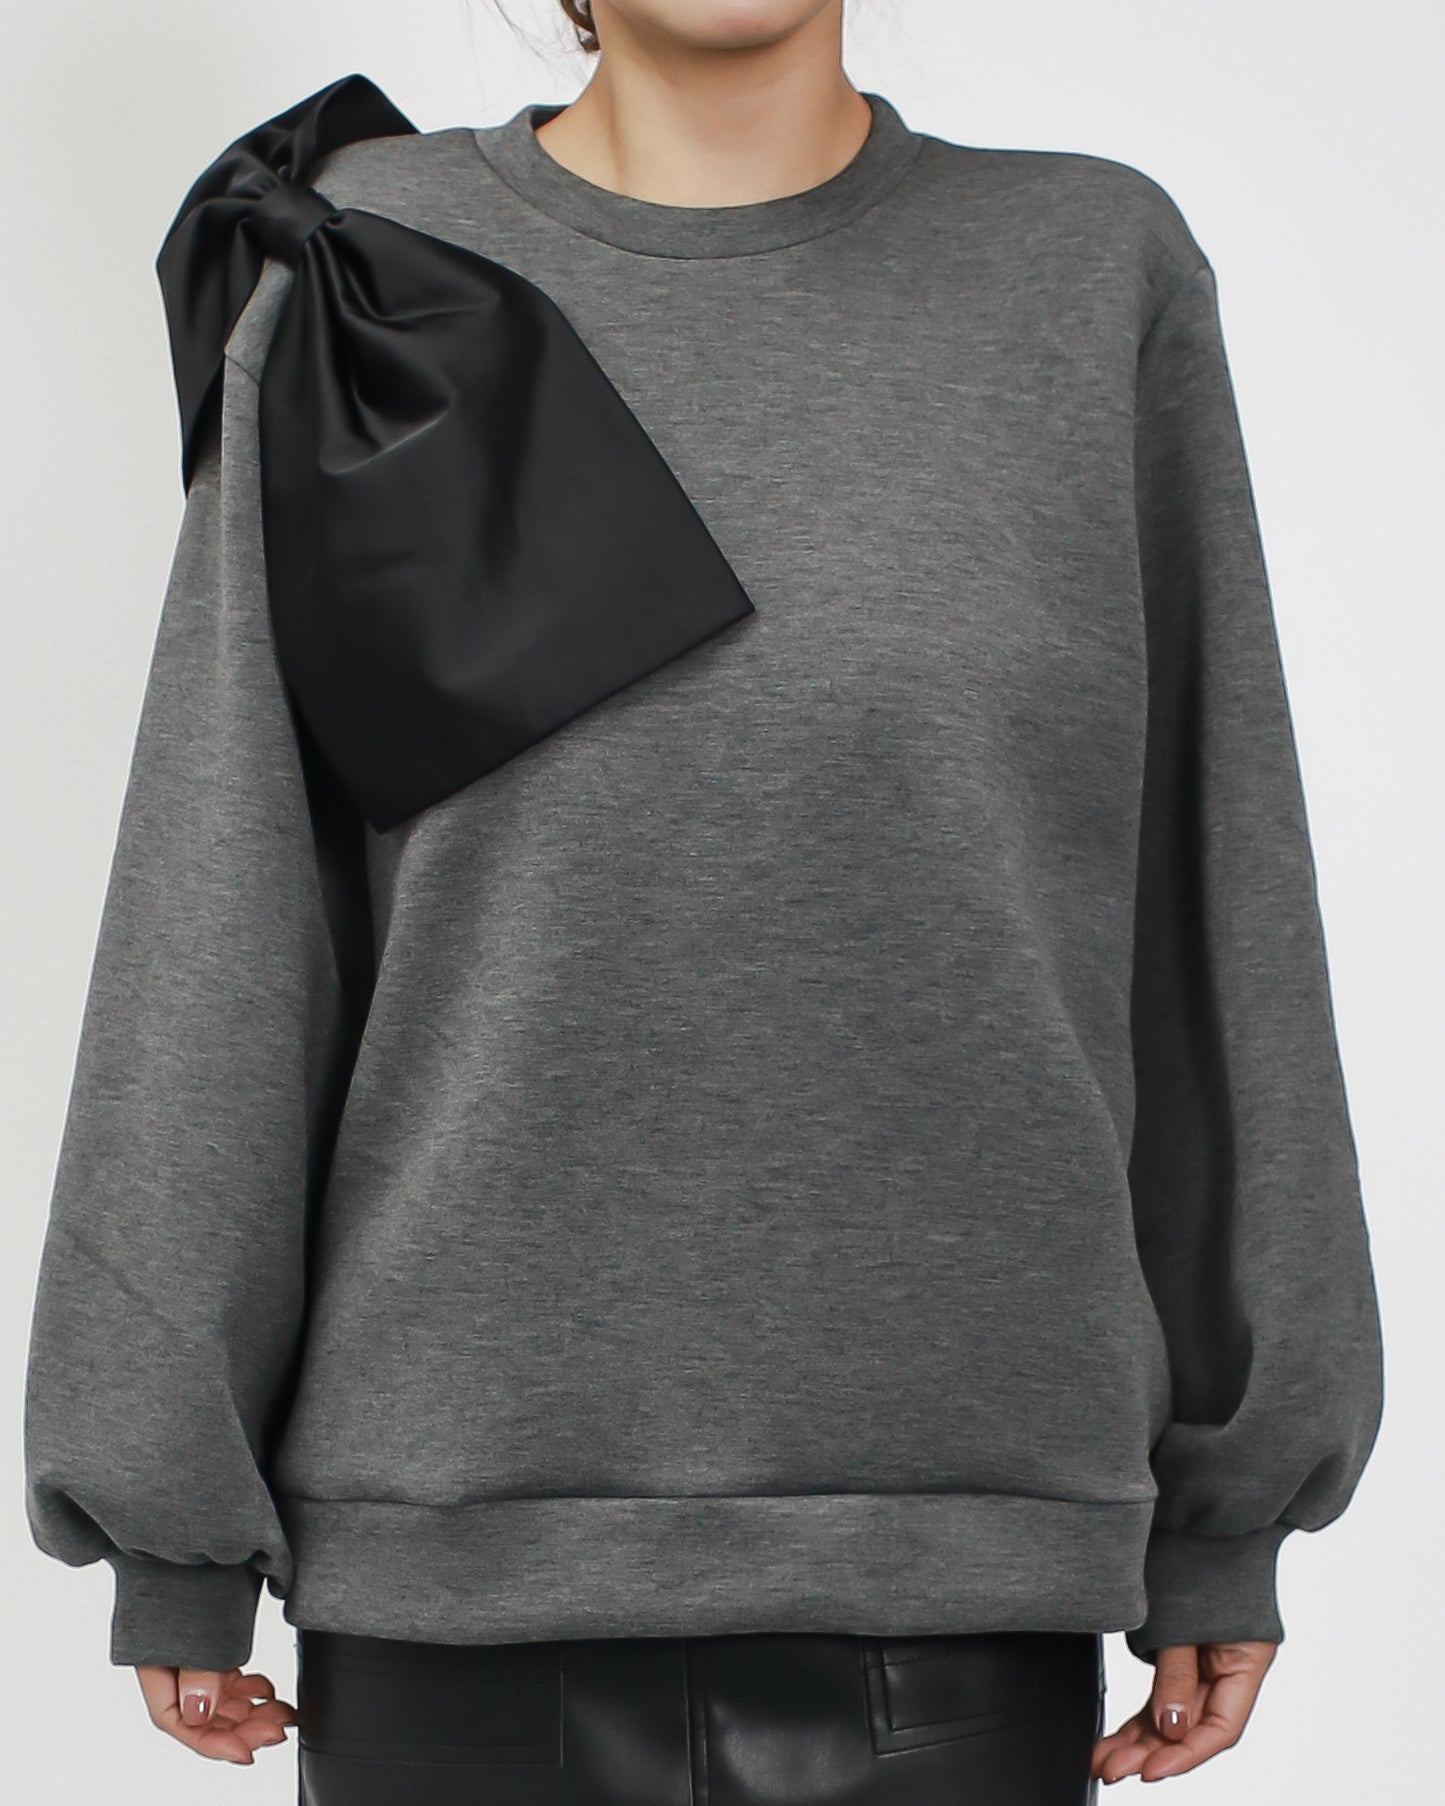 grey neoprene sweatshirt with black bow side *pre-order*